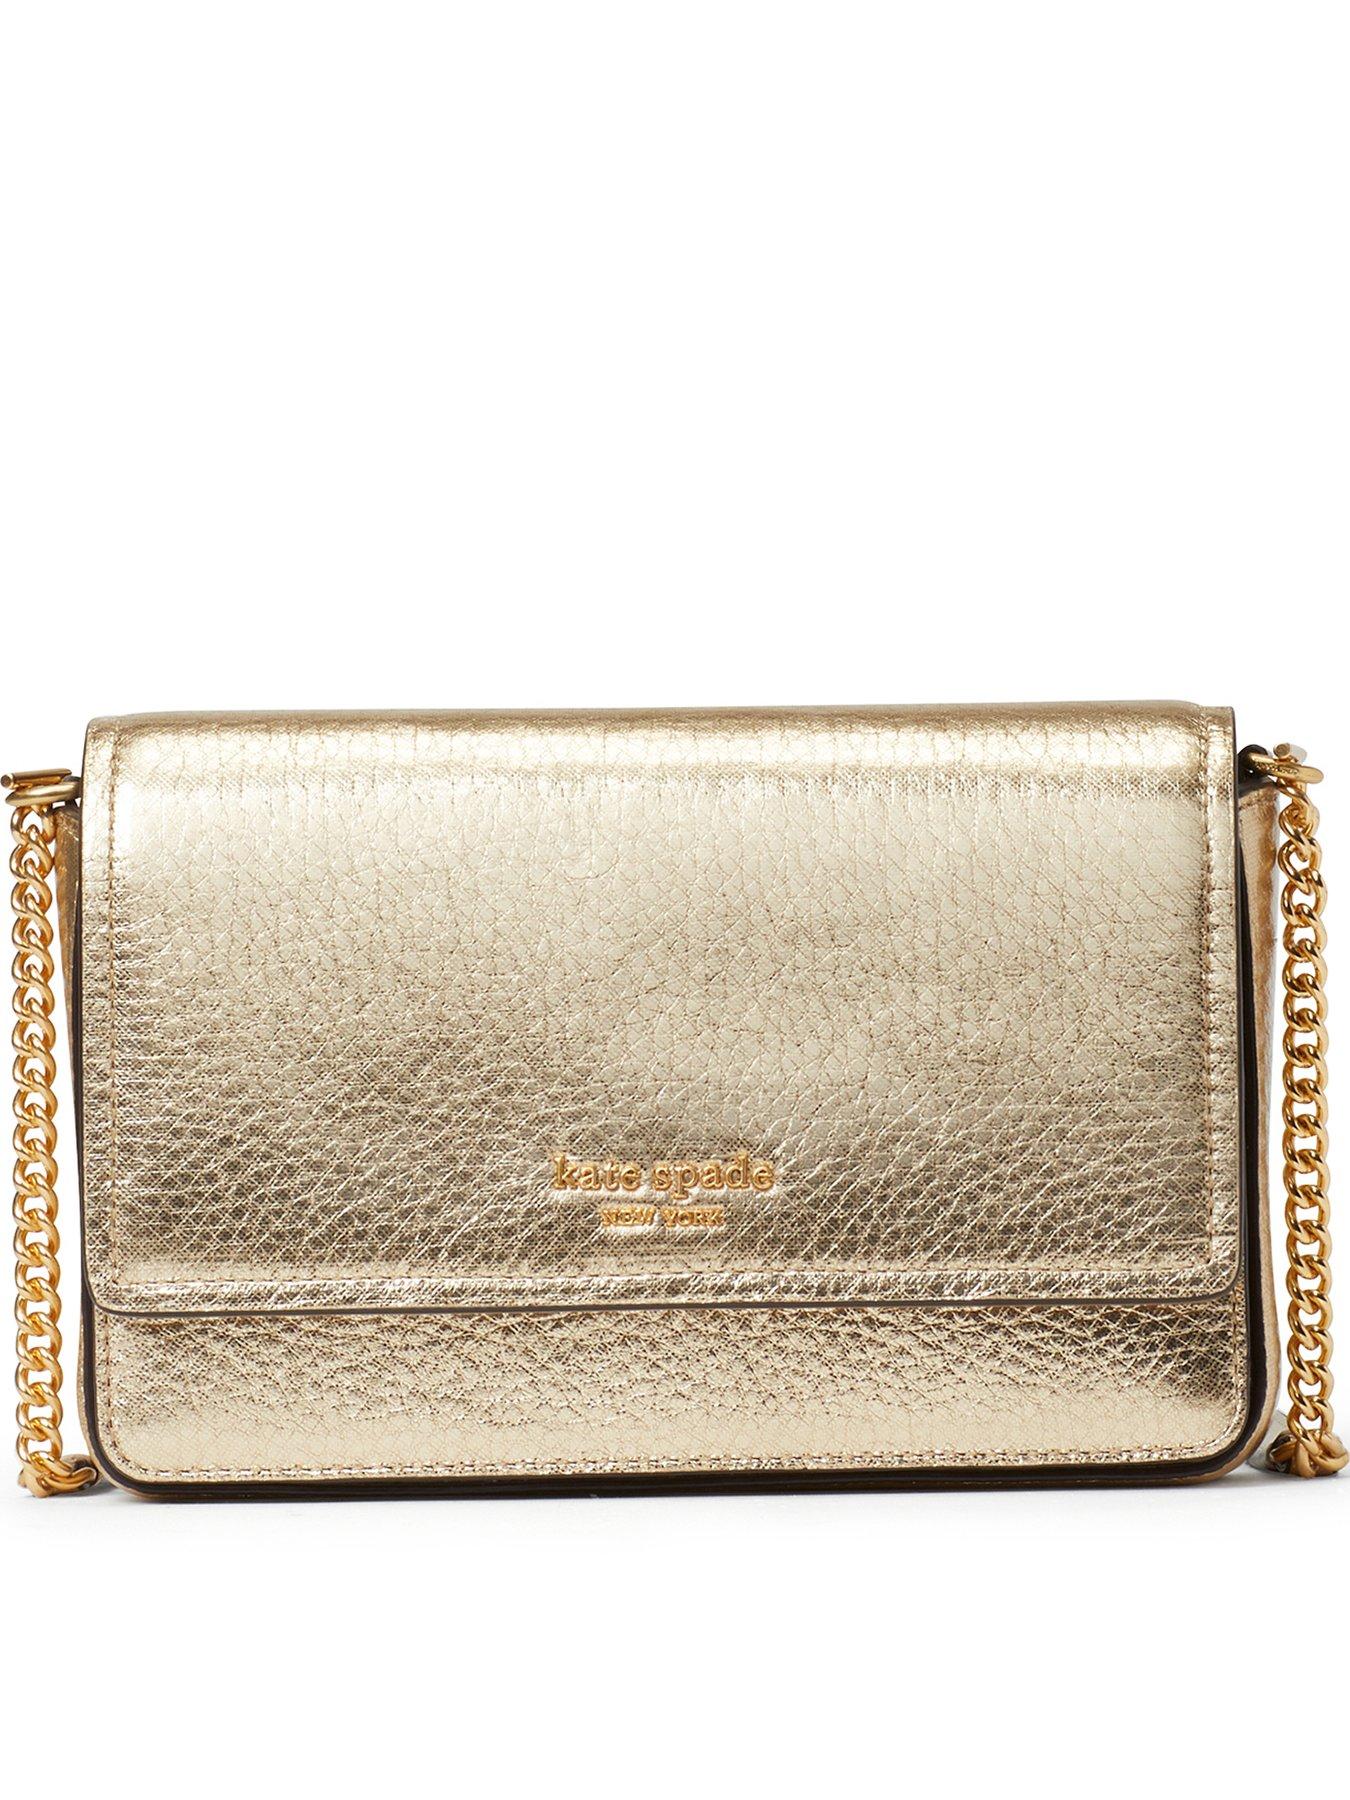 Kate Spade New York Morgan Flap Chain Wallet Bag - Metallic Gold |  